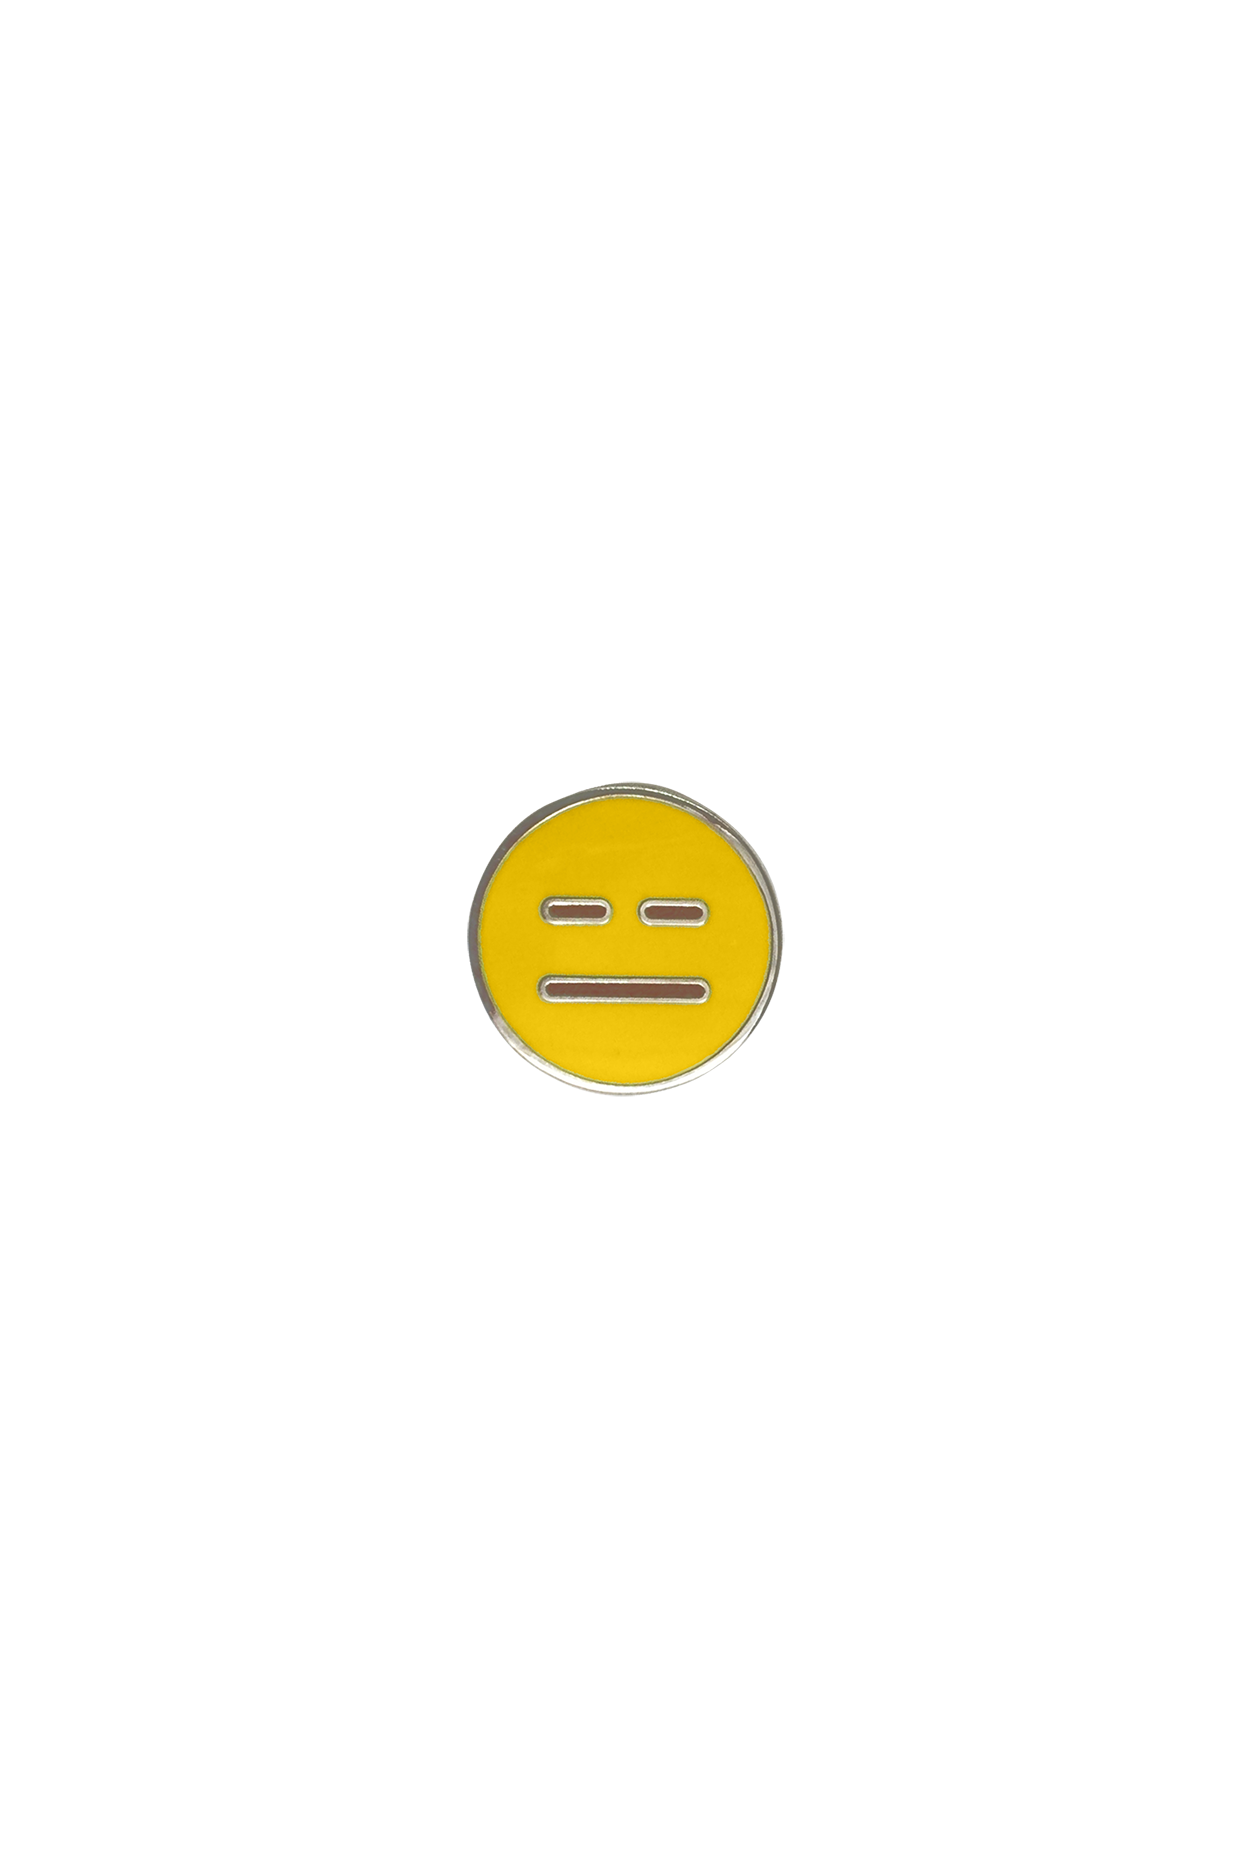 Neutral Emoji Lapel Pin - Philistine